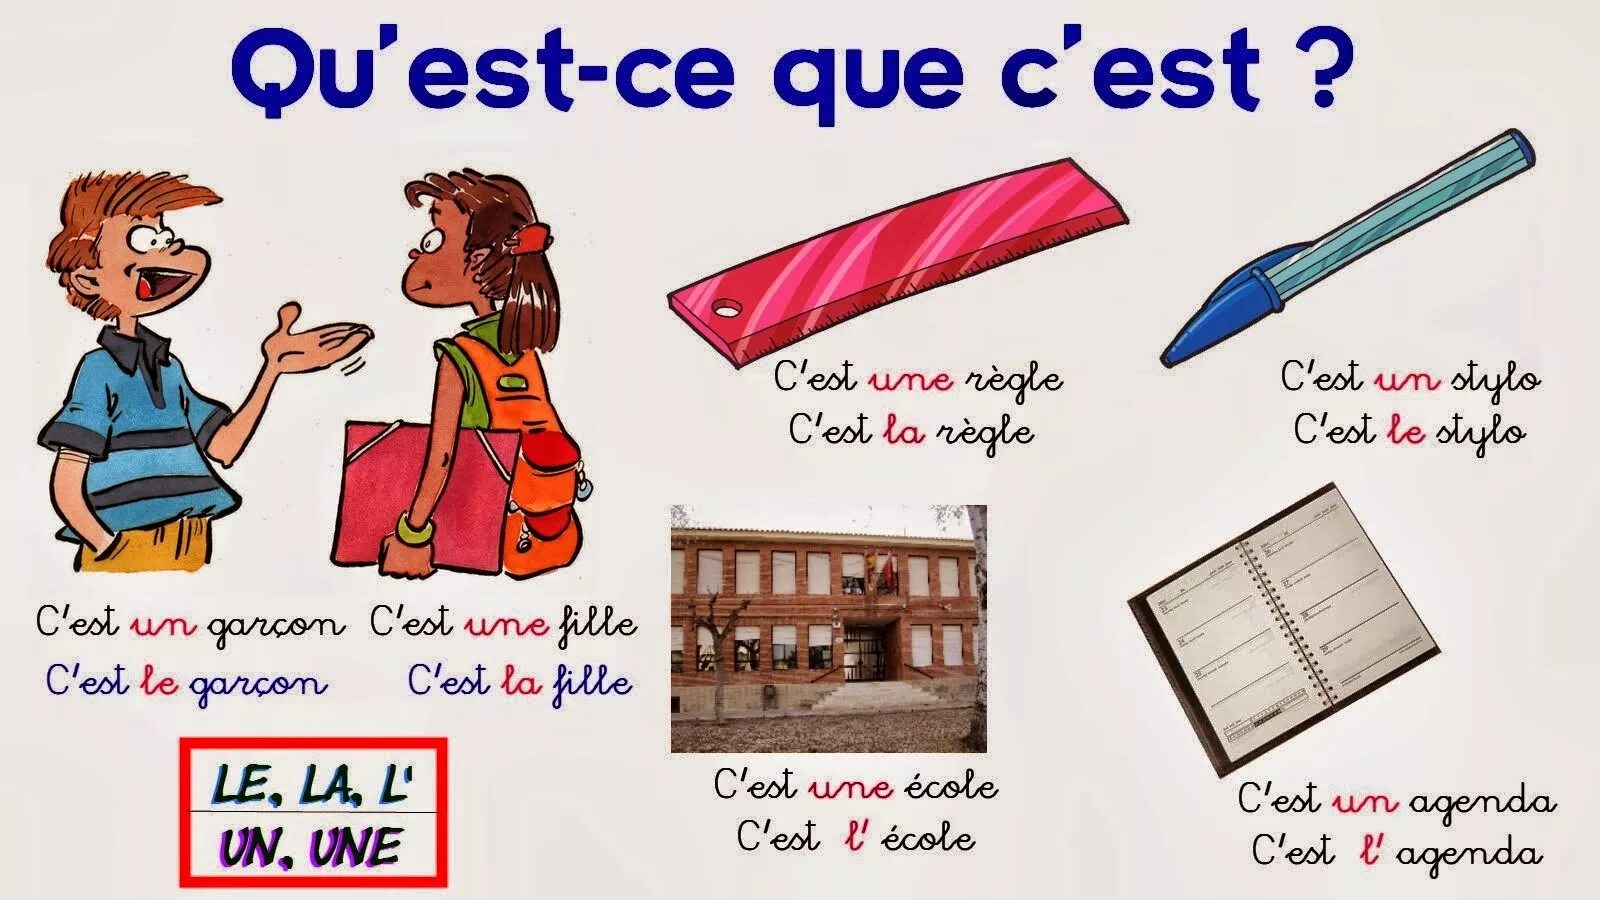 Qui est ce c est. Уроки по французскому языку. Французский язык c'est ...ce sont. C'est ce sont во французском. C'est il est во французском.